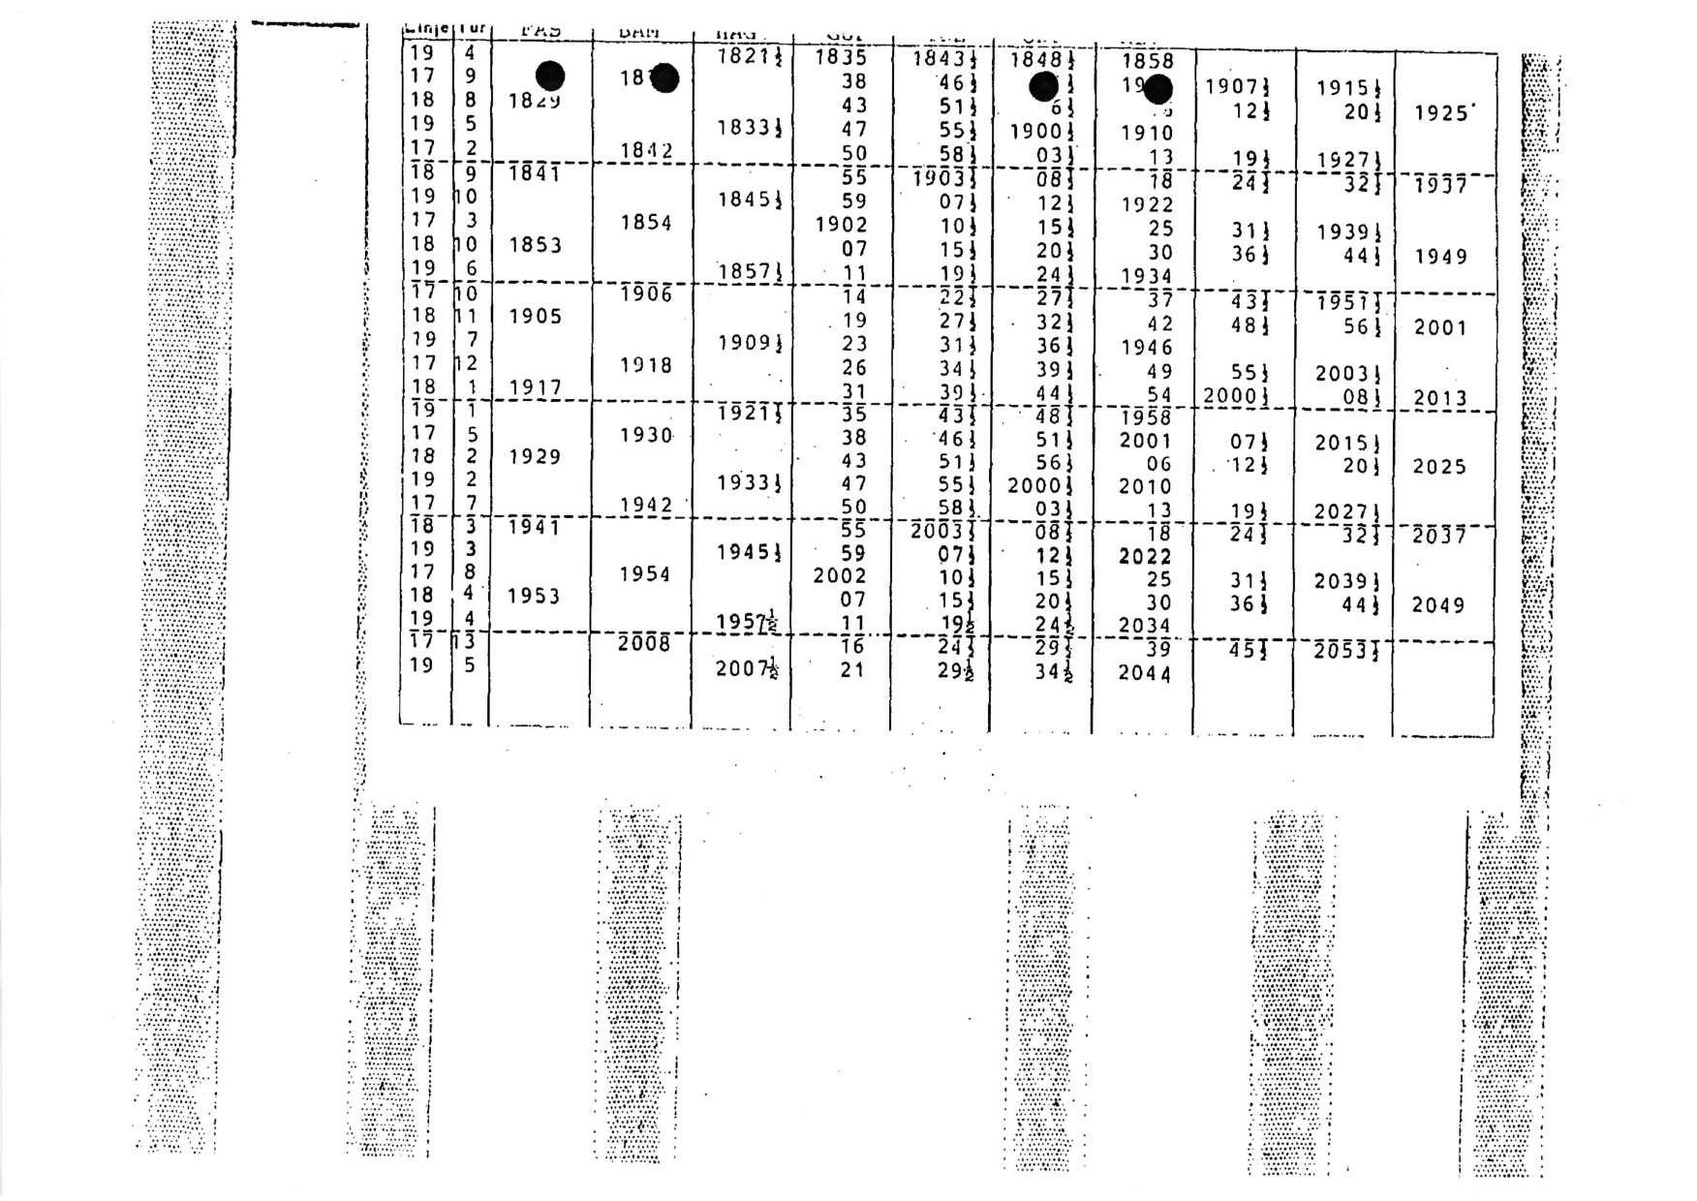 Pol-1987-09-30 A7718-02 Tågtider tunnelbana sidorna 4-8.pdf